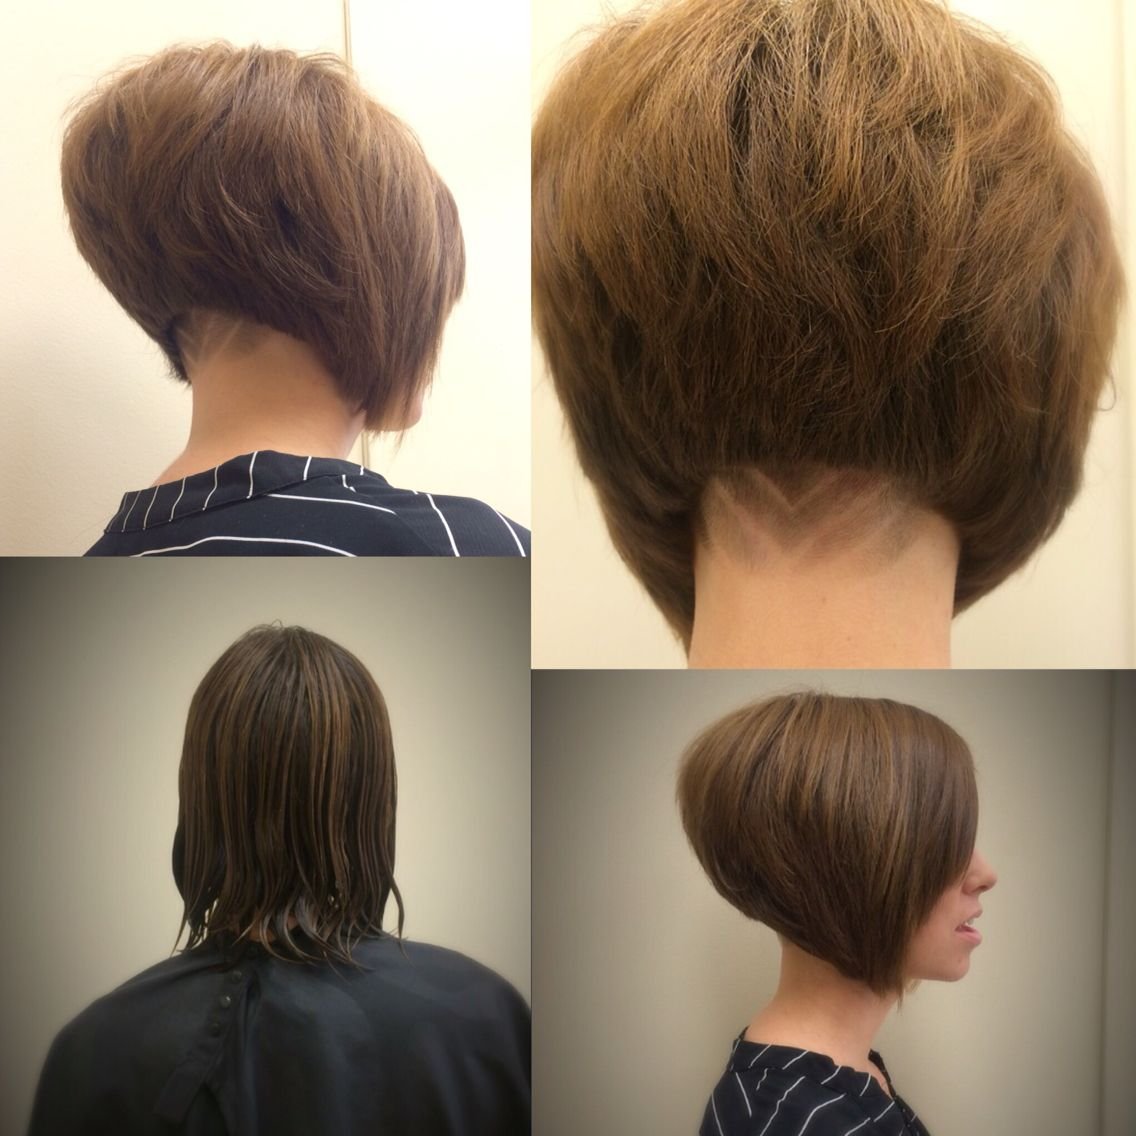 Стрижка асимметрия на короткие волосы фото сзади и спереди